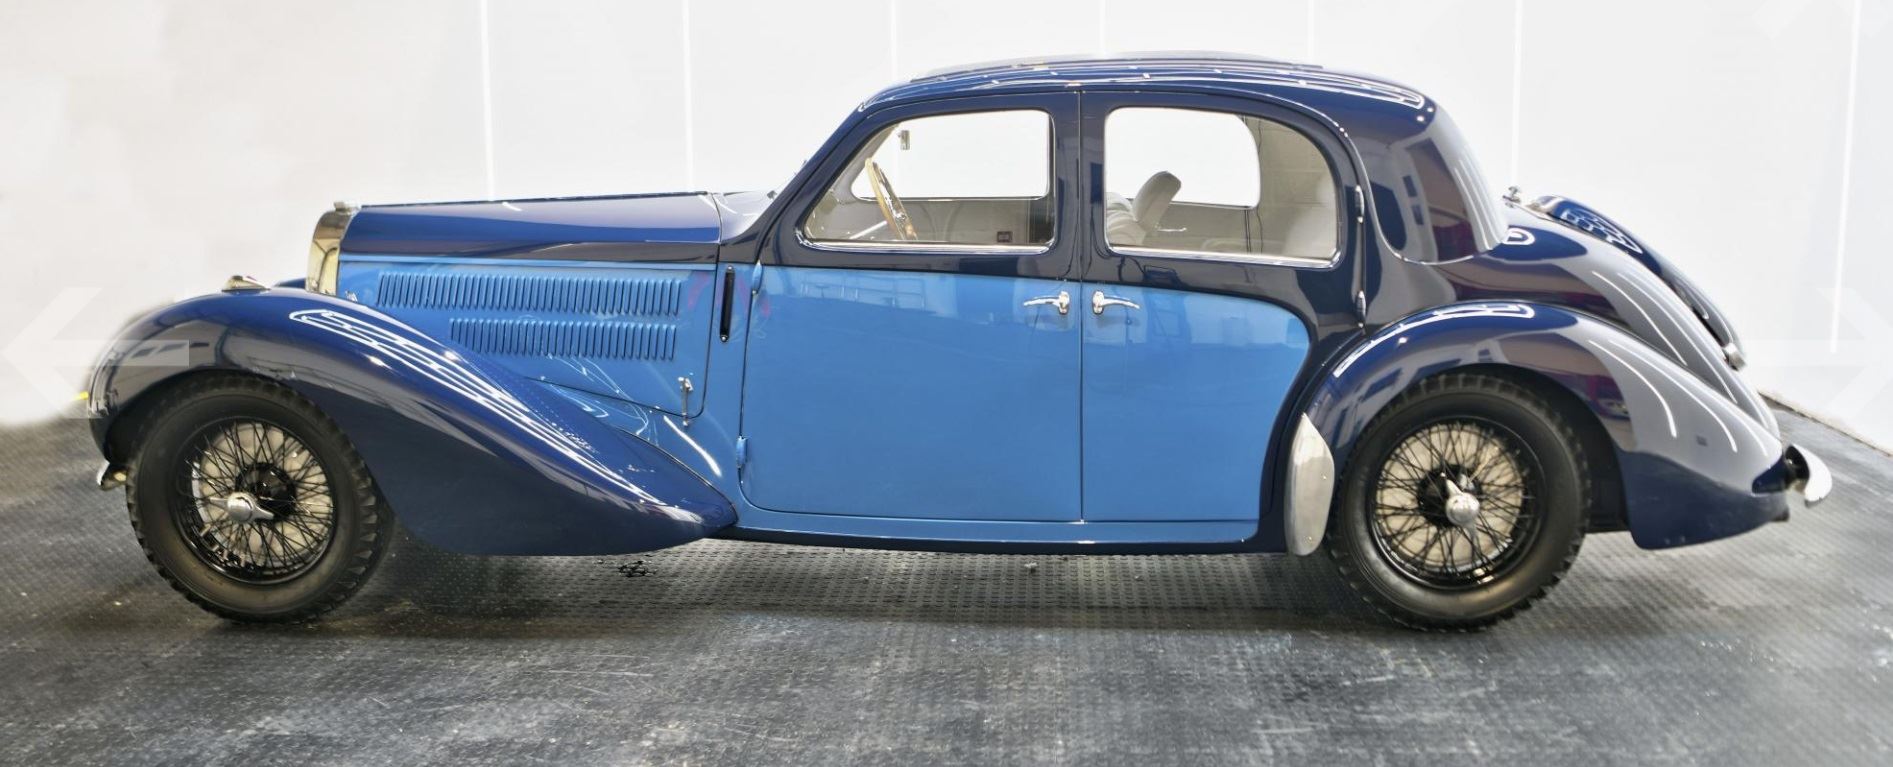 Bugatti type 57 6aajnhgr bkq8fnnlilmd